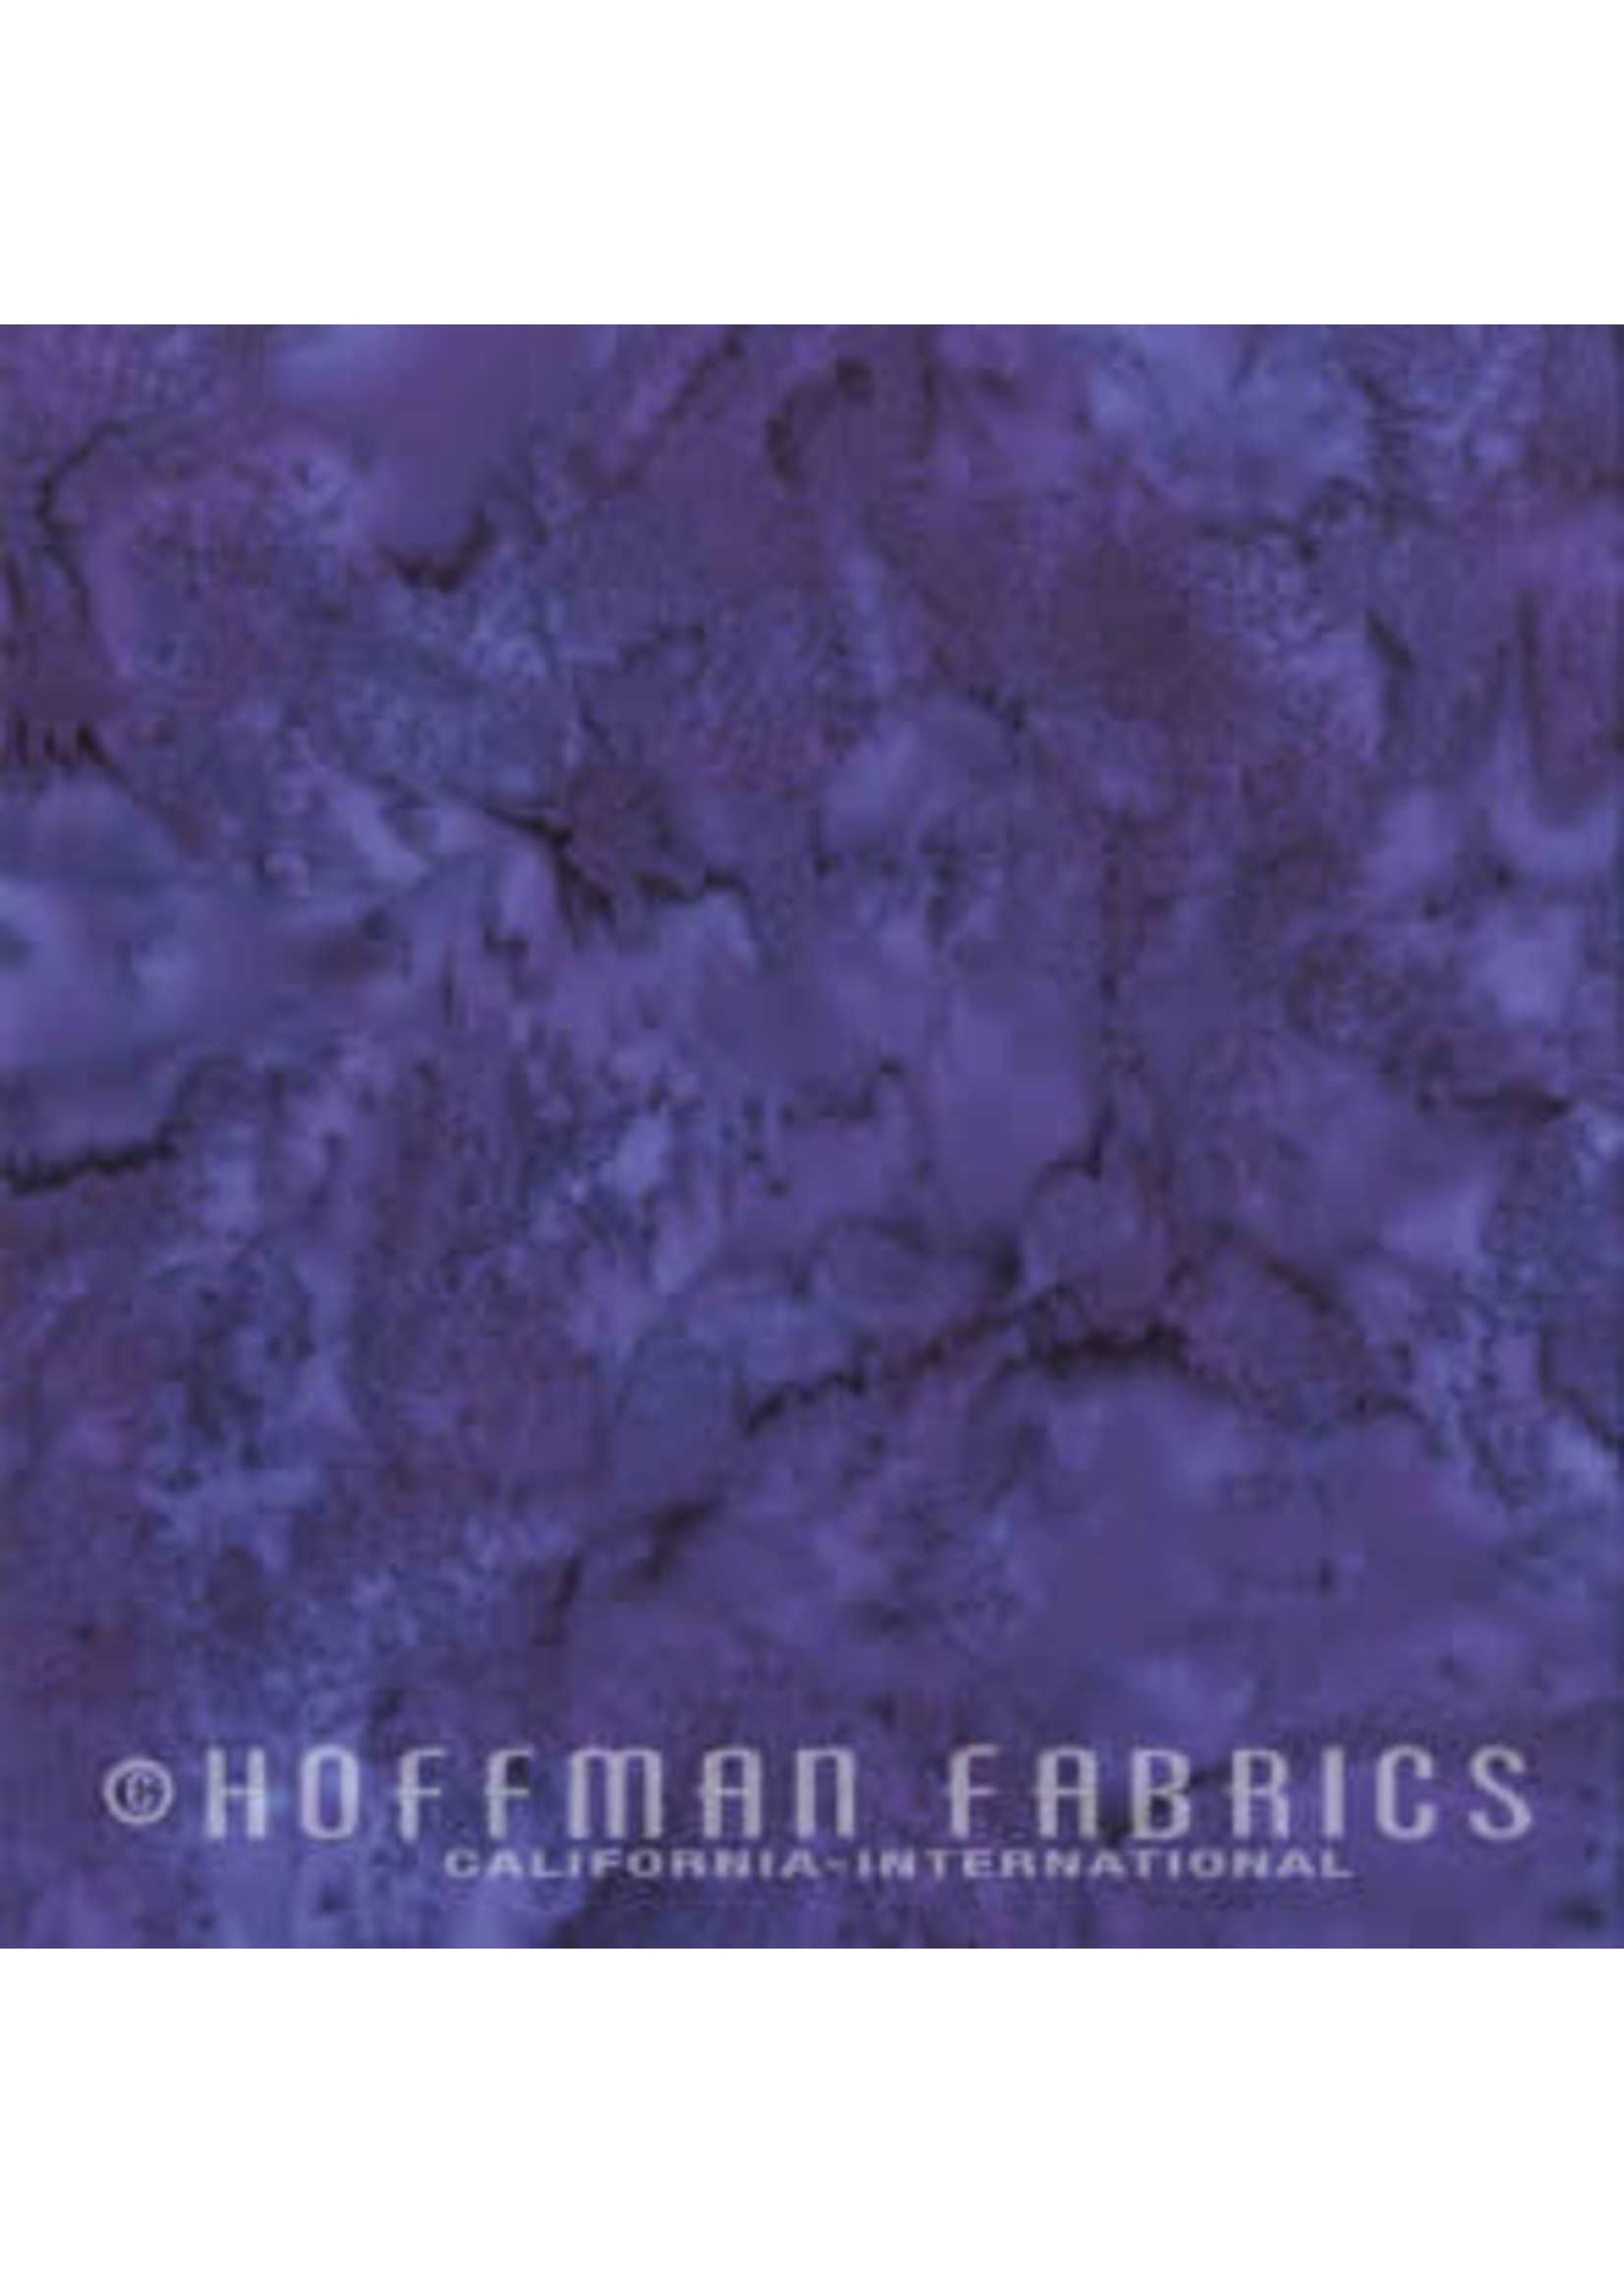 Hoffman Fabrics Bali Hand-Dyed - New Grape - 3018-045